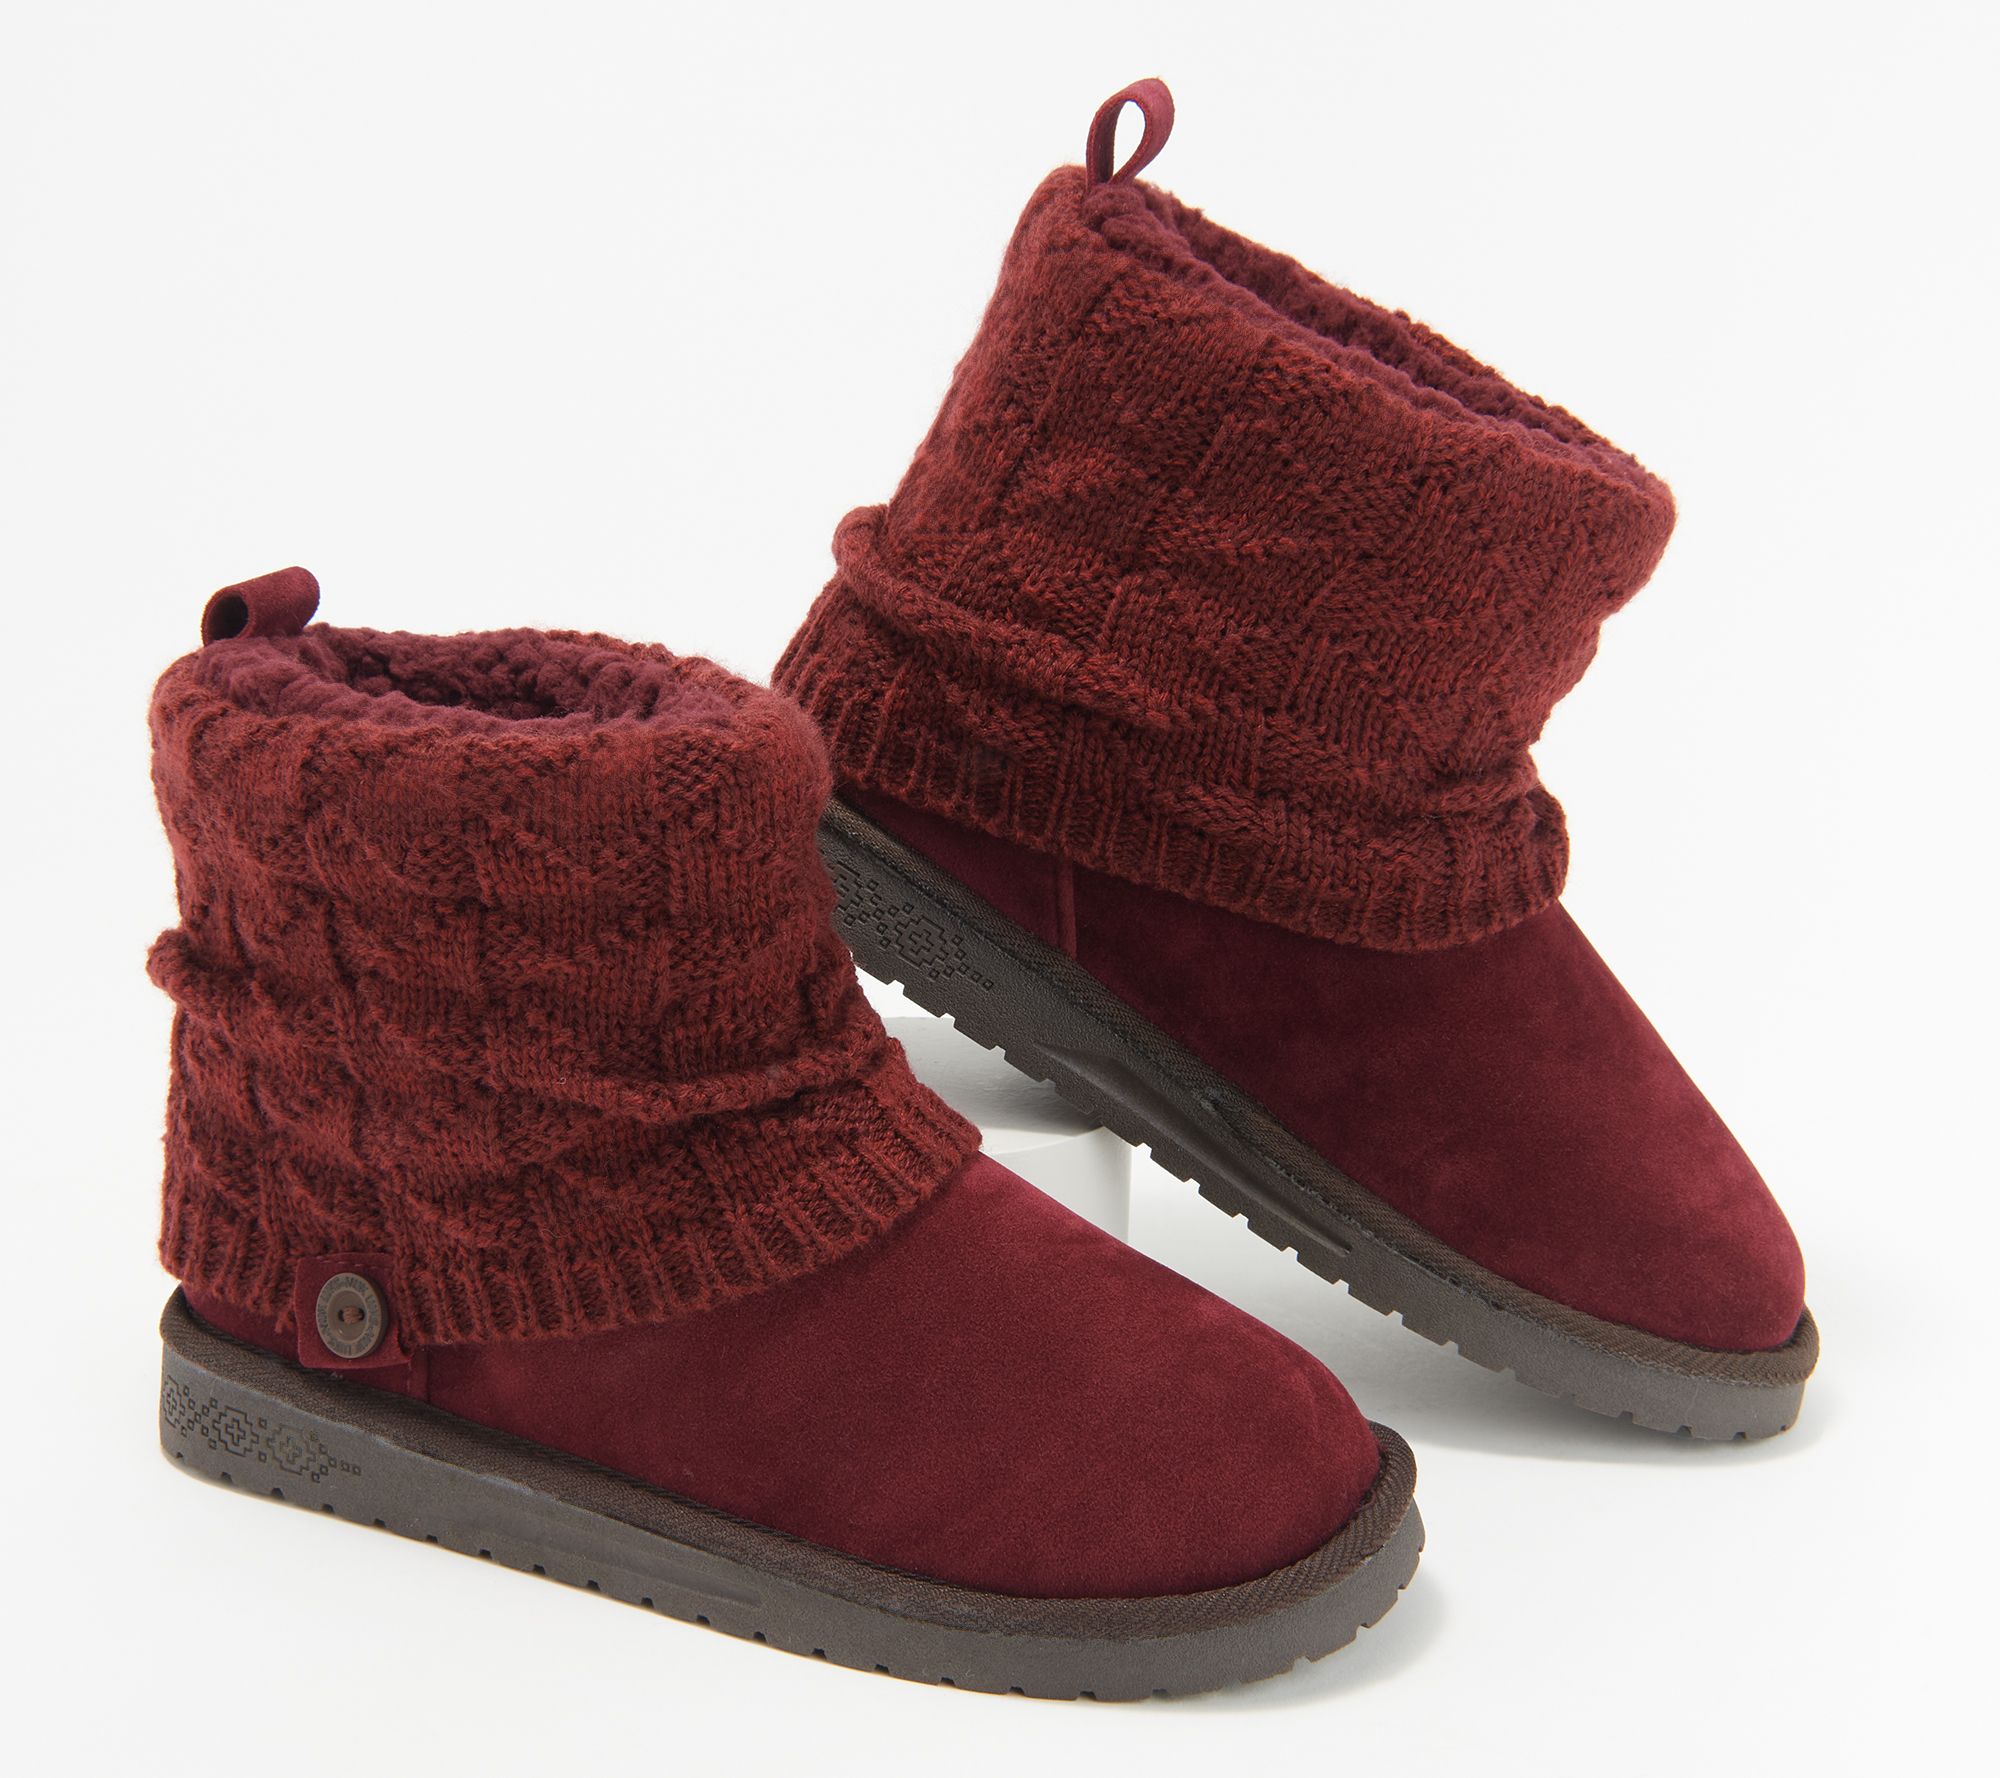 Muk Luks Knit Laurel Boots Sweater - Winter